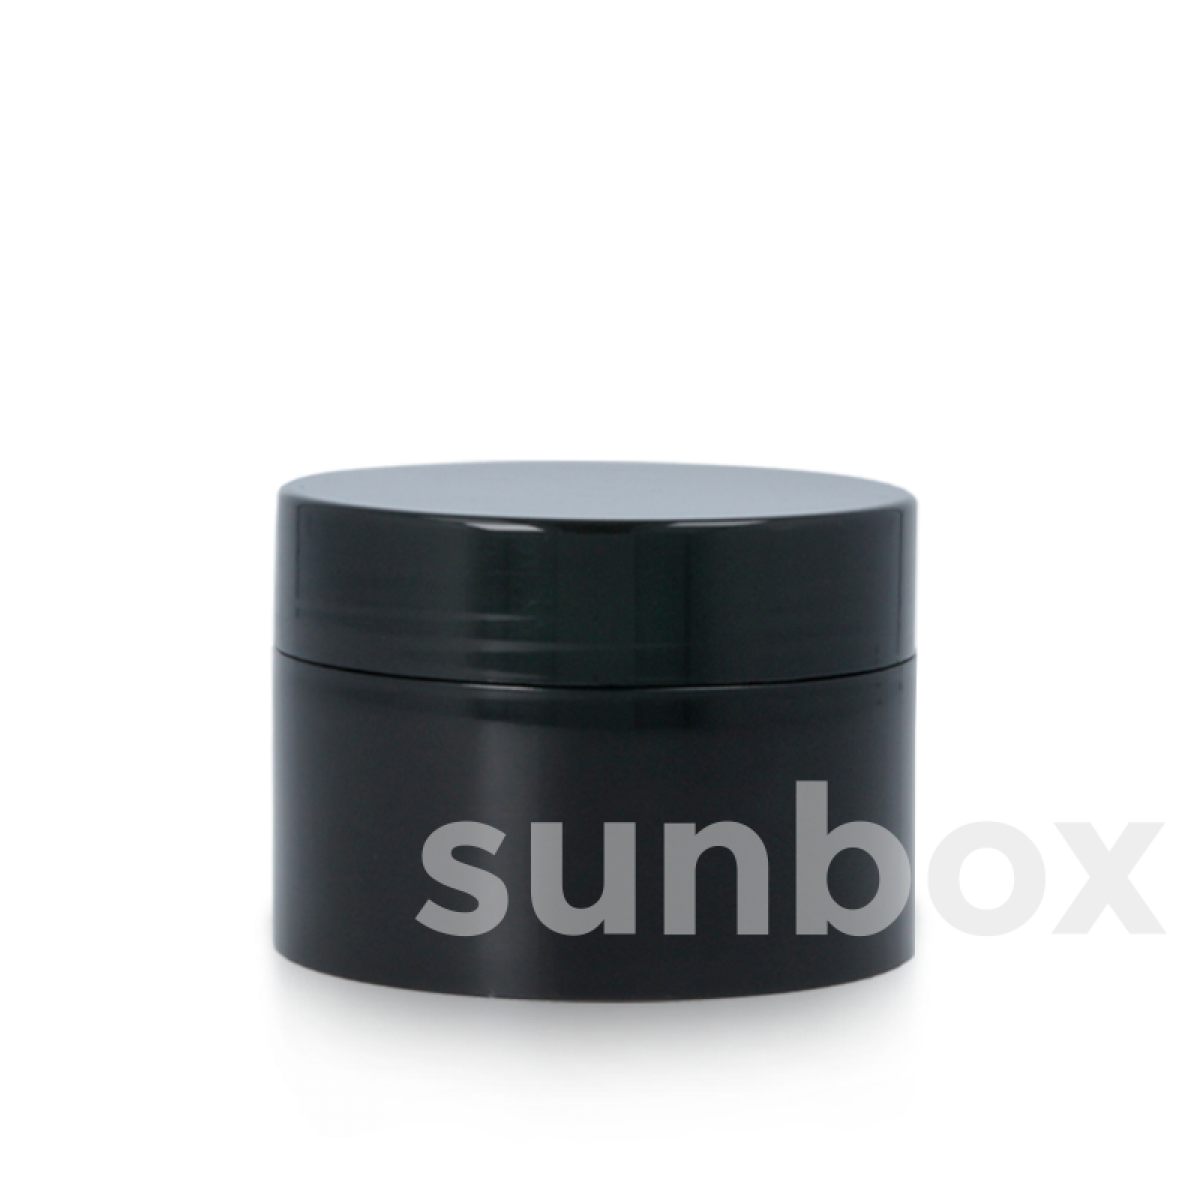 sunbox_prod_2